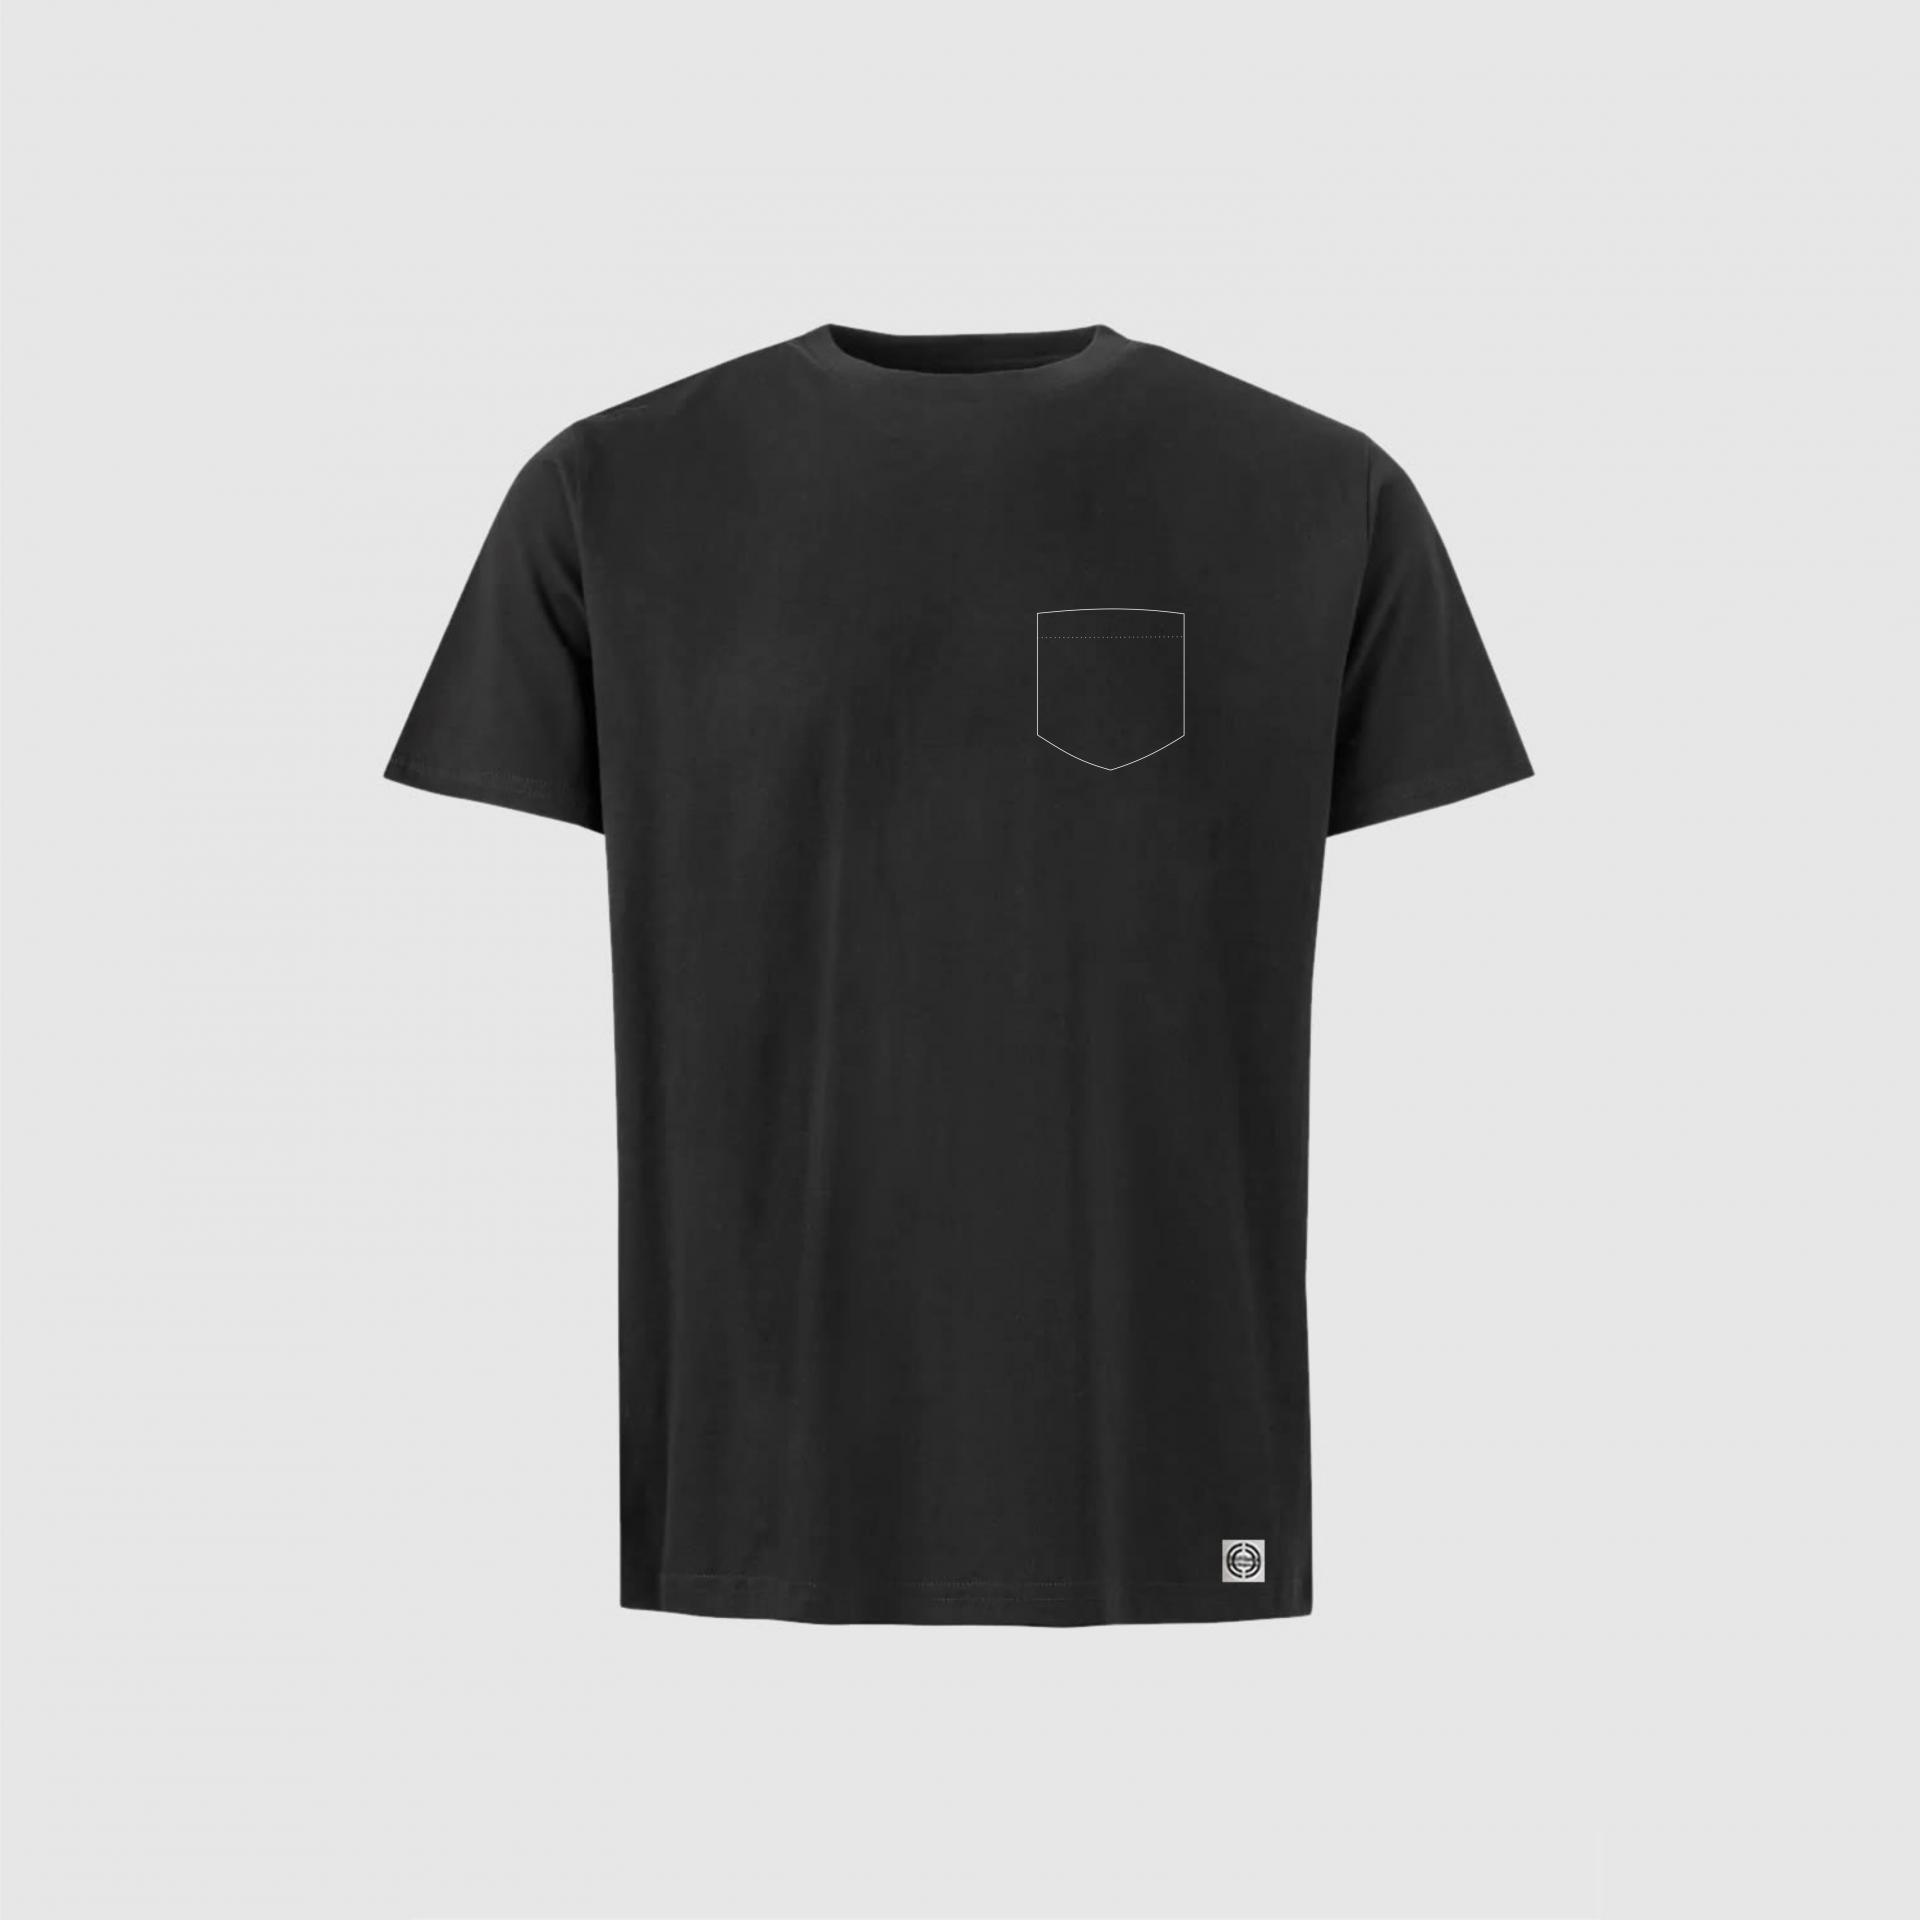 Camiseta unisex algodón orgánico bolsillo personalizado color negro